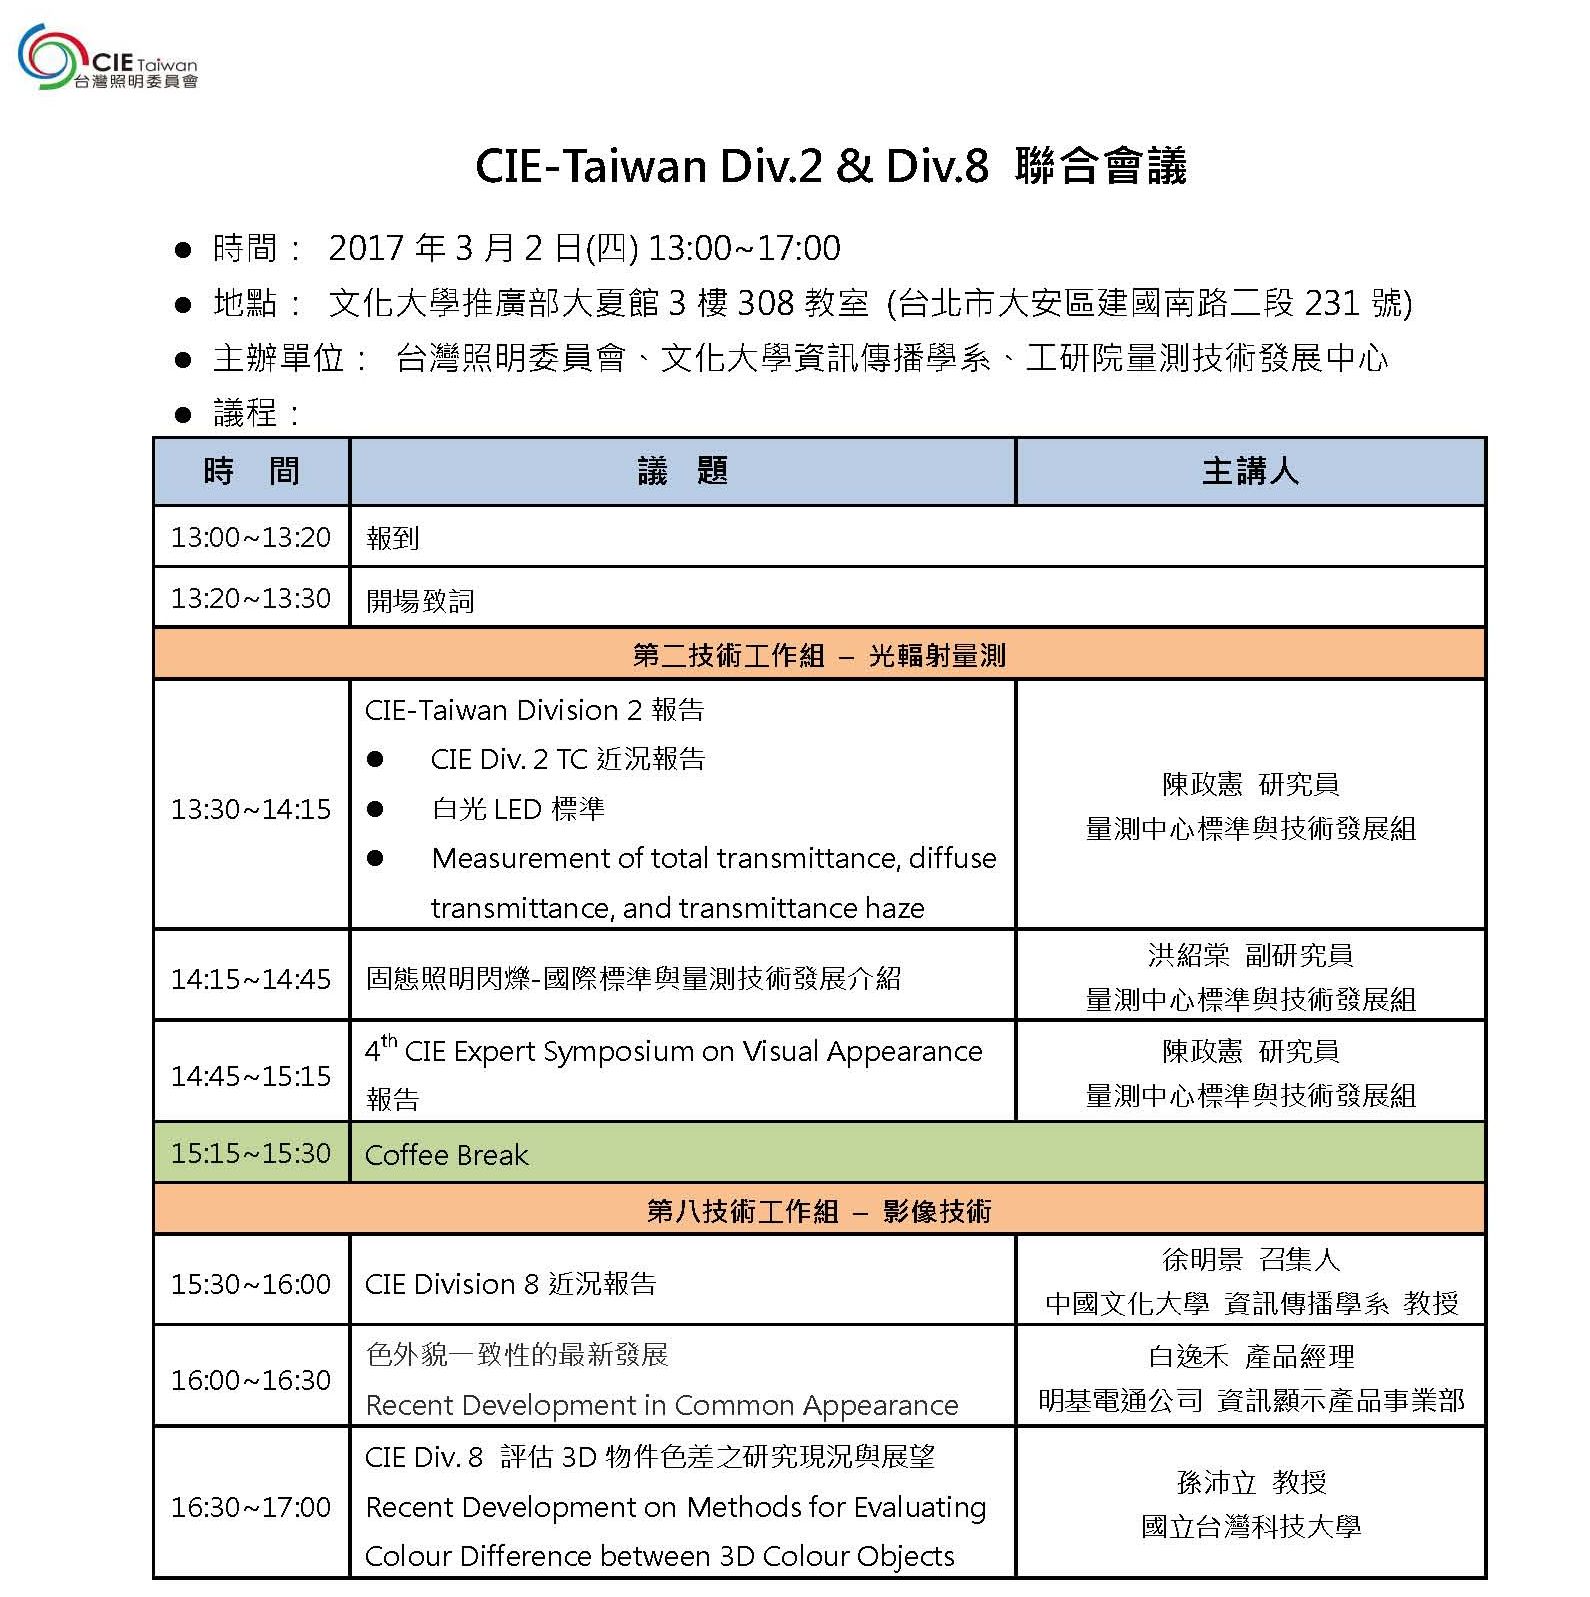 20170302 cie taiwan div2 8 meeting agenda